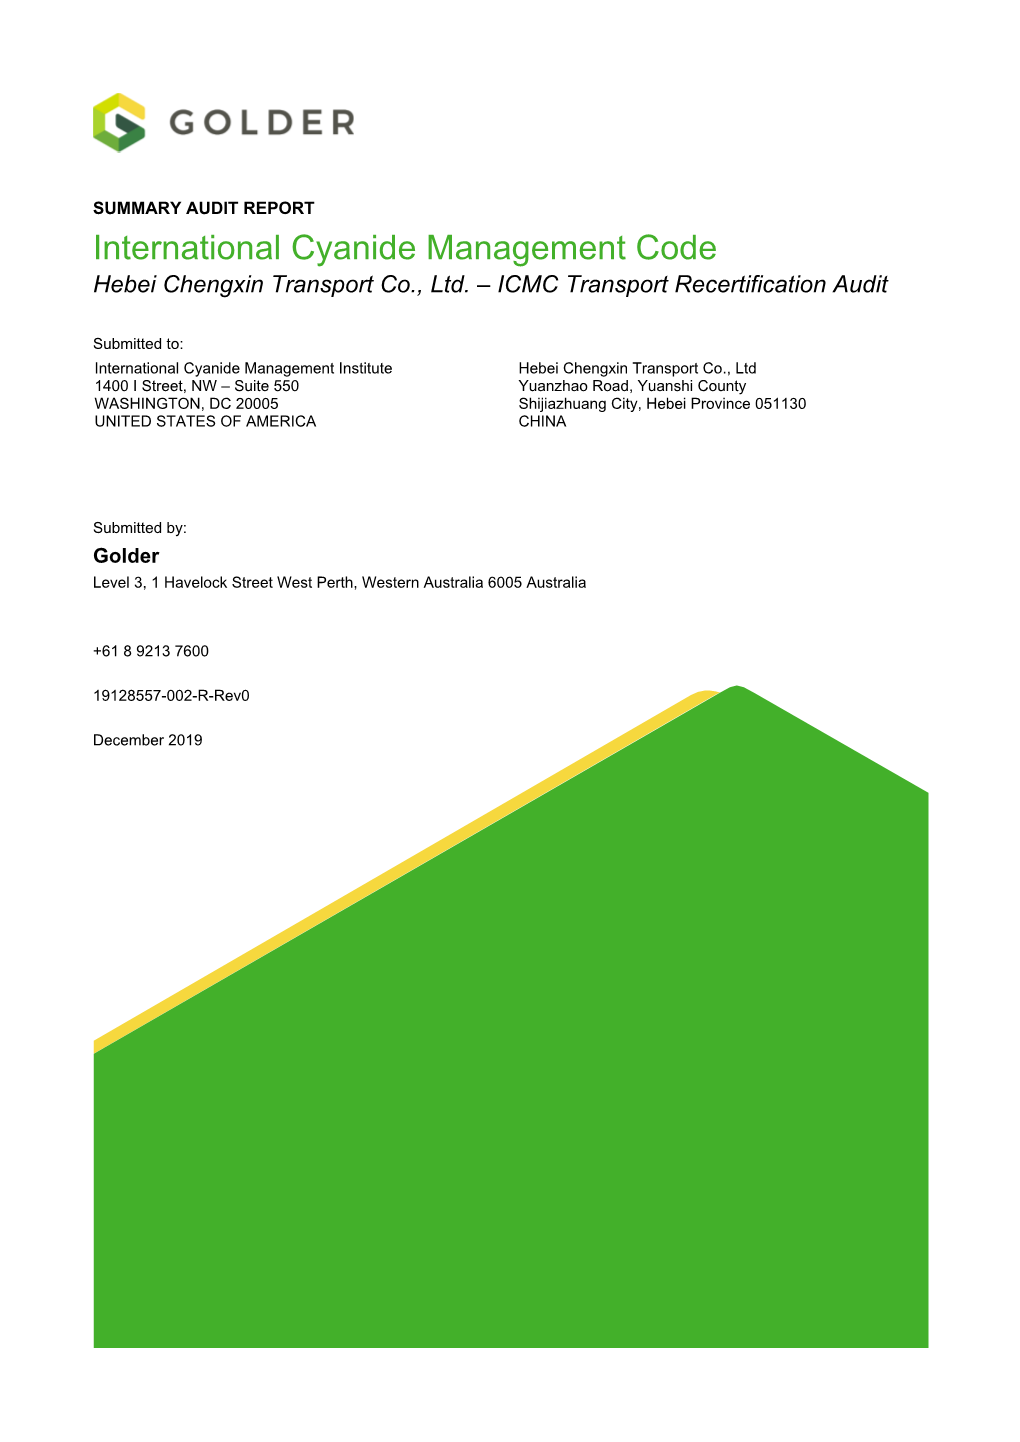 SUMMARY AUDIT REPORT International Cyanide Management Code Hebei Chengxin Transport Co., Ltd